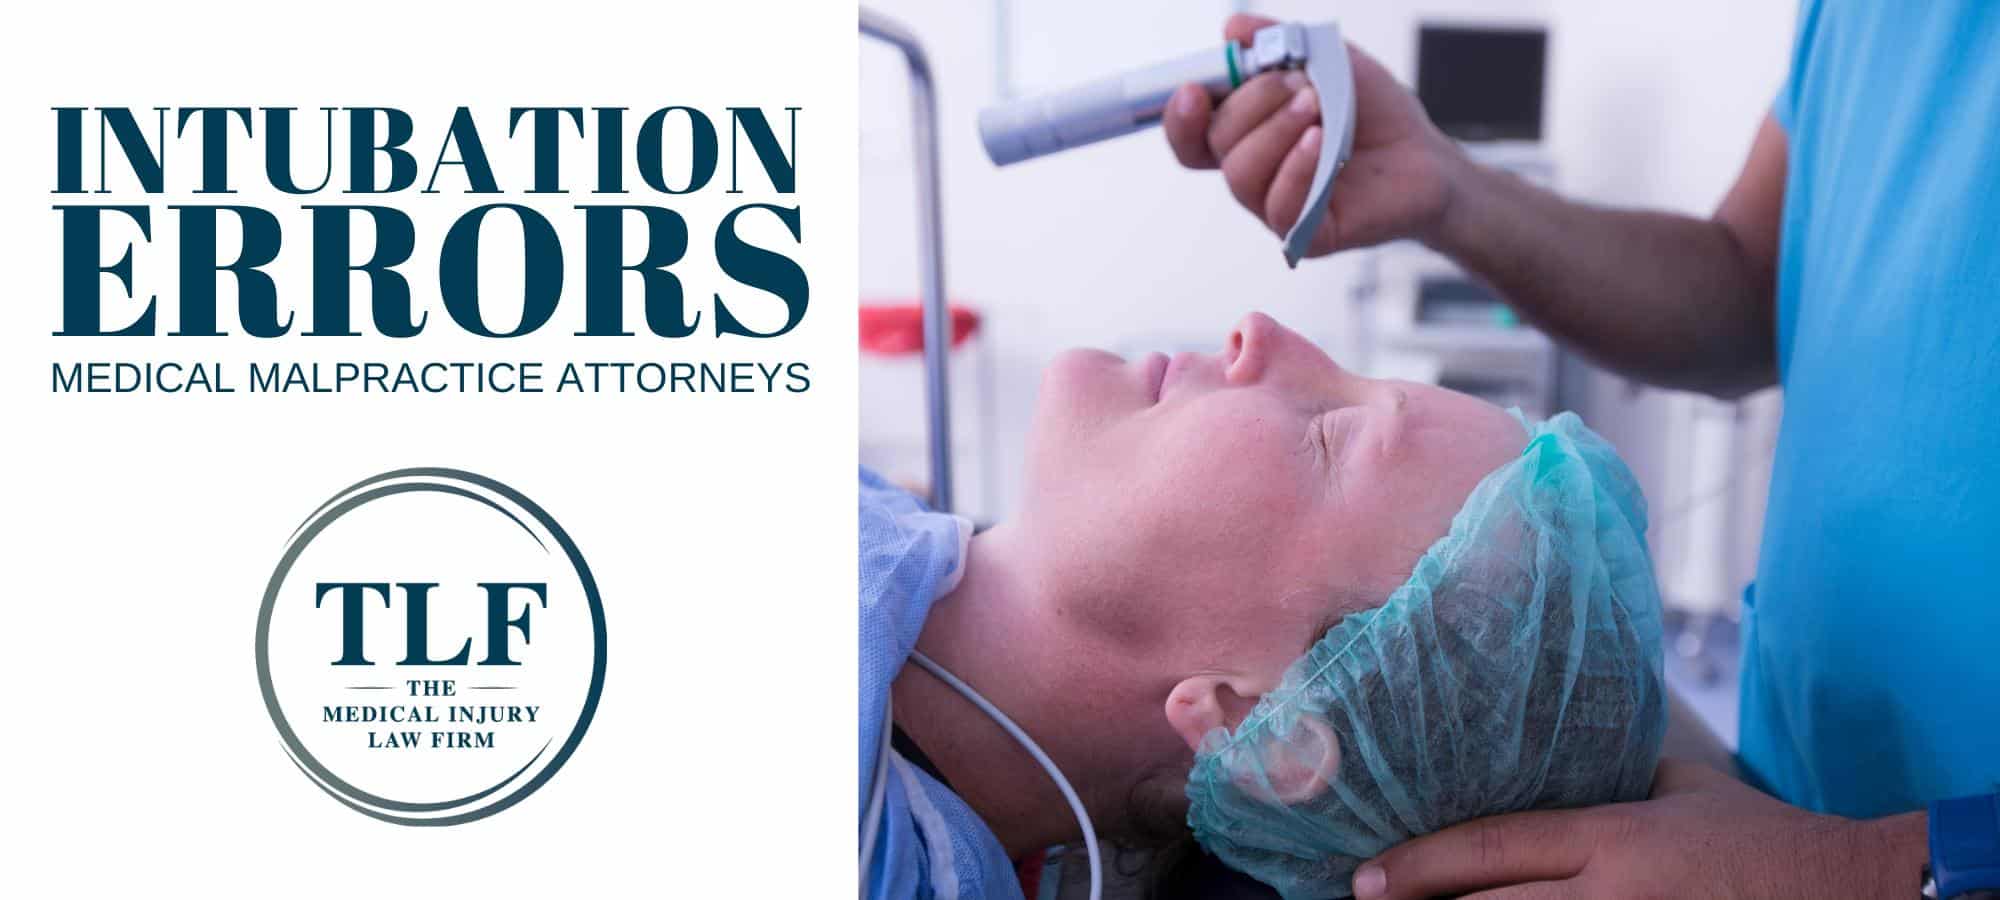 Intubation Error Medical Malpractice Attorneys